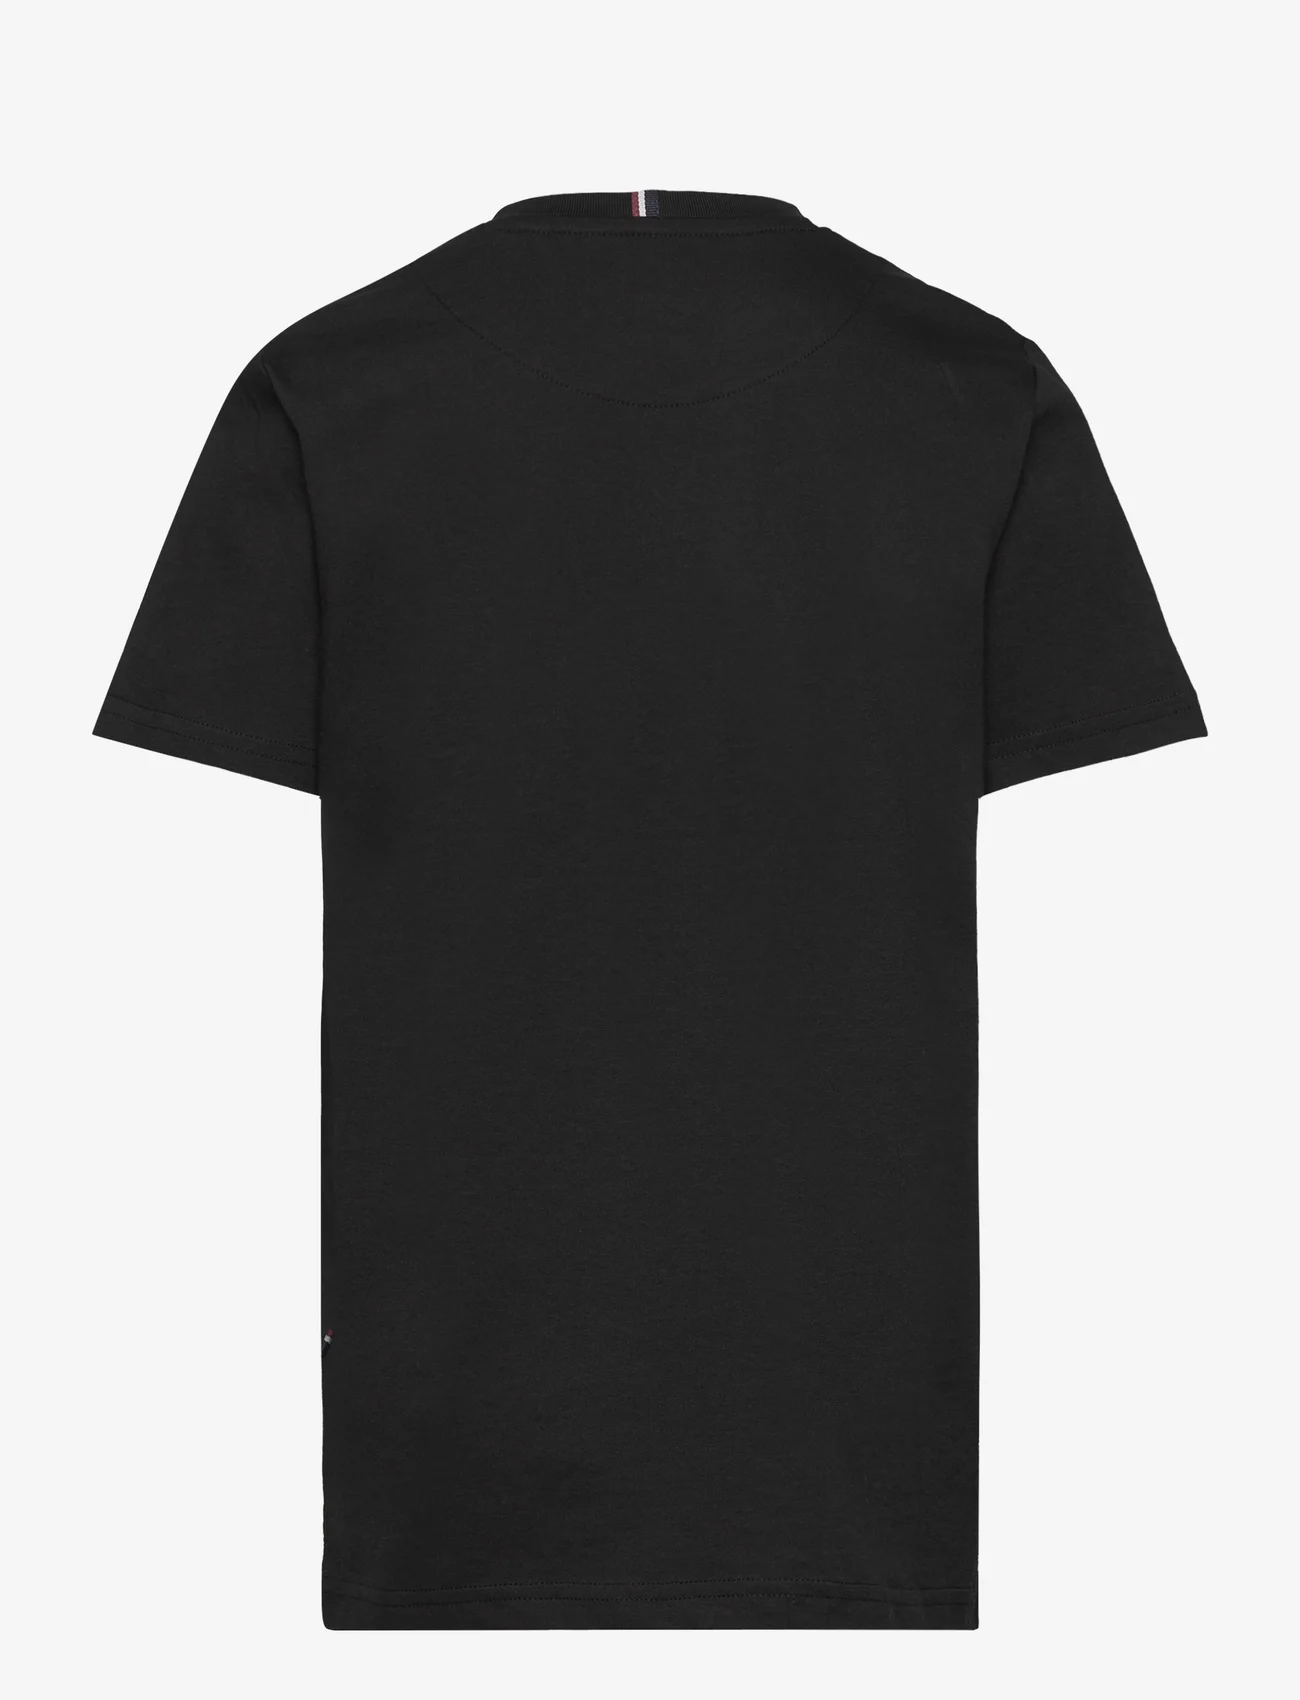 U.S. Polo Assn. - DHM Tshirt - short-sleeved t-shirts - black bright white dhm - 1